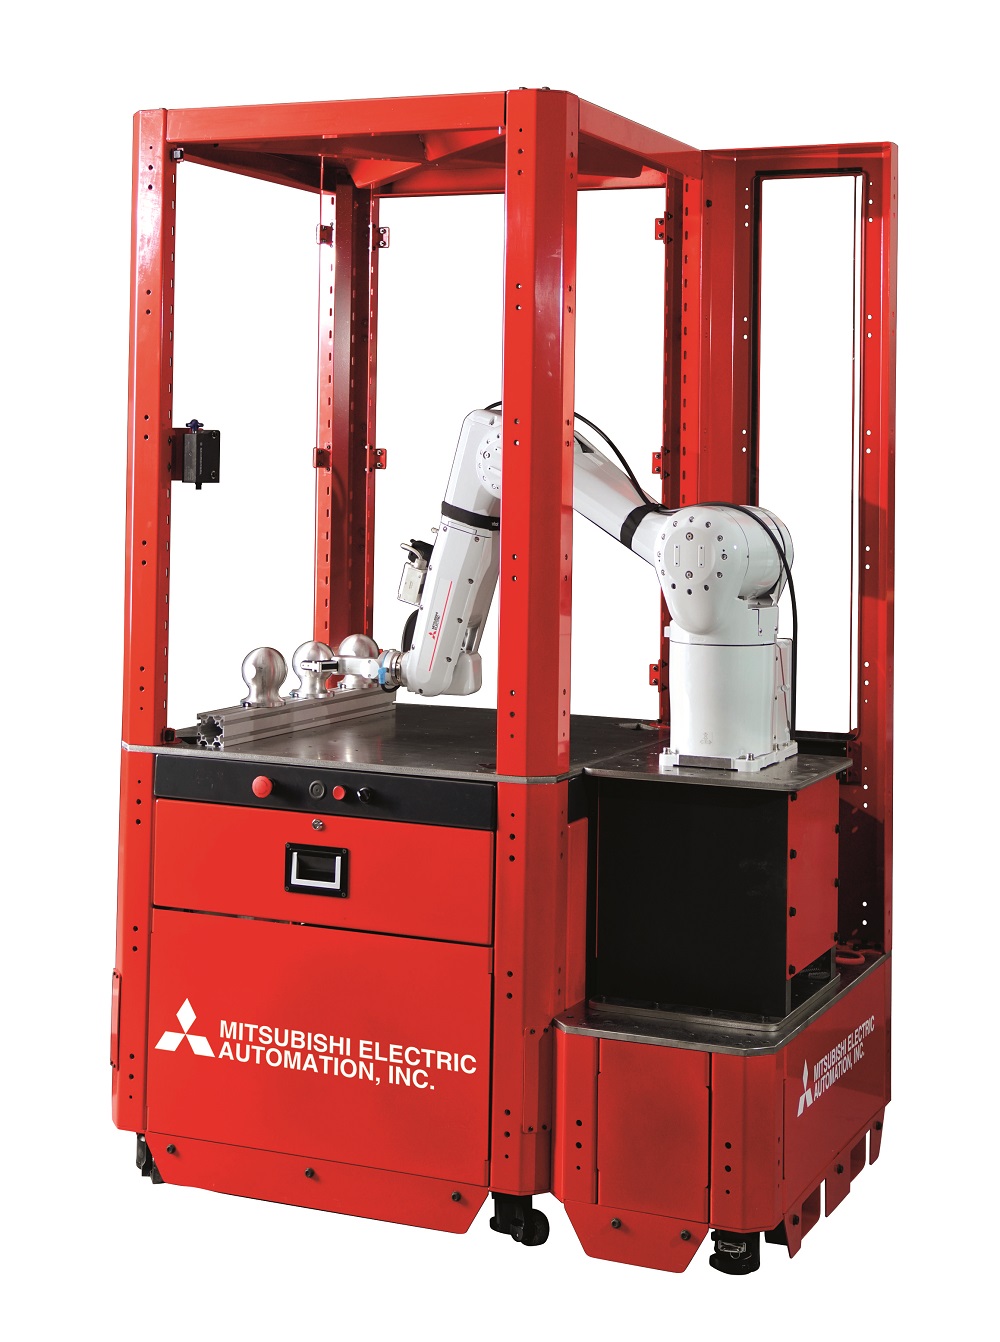 Mitsubishi LoadMate Plus™ Machine Tending Robotic Cell | Absolute Machine Tools